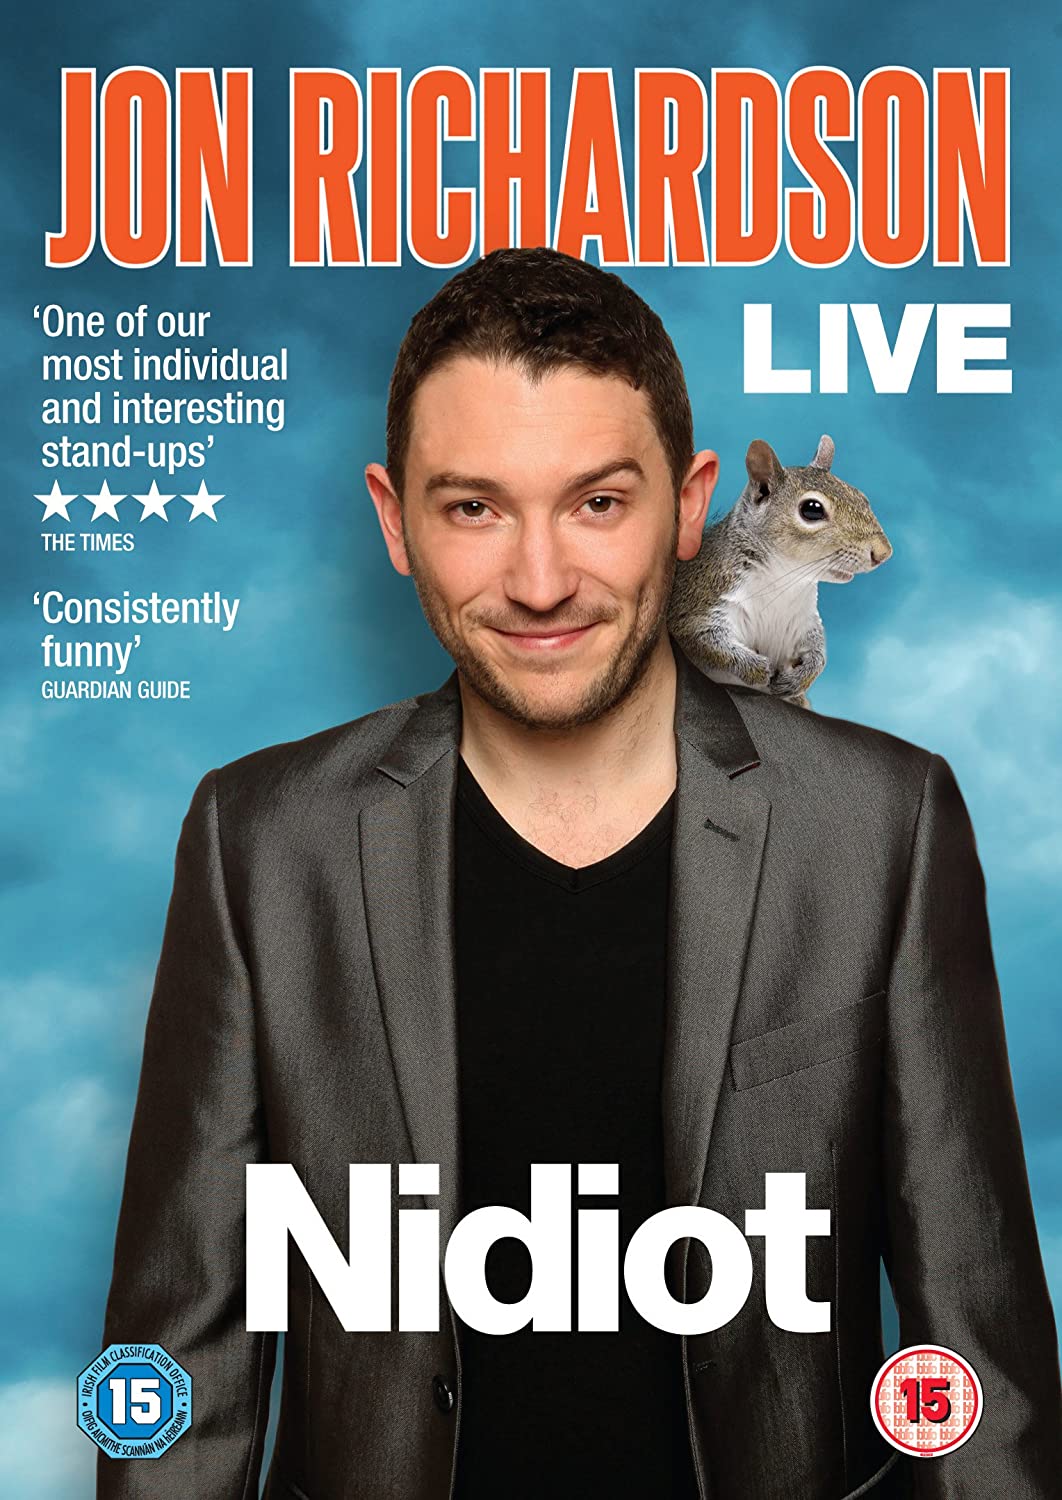 Jon Richardson - Nidiot Live [2014] [DVD]